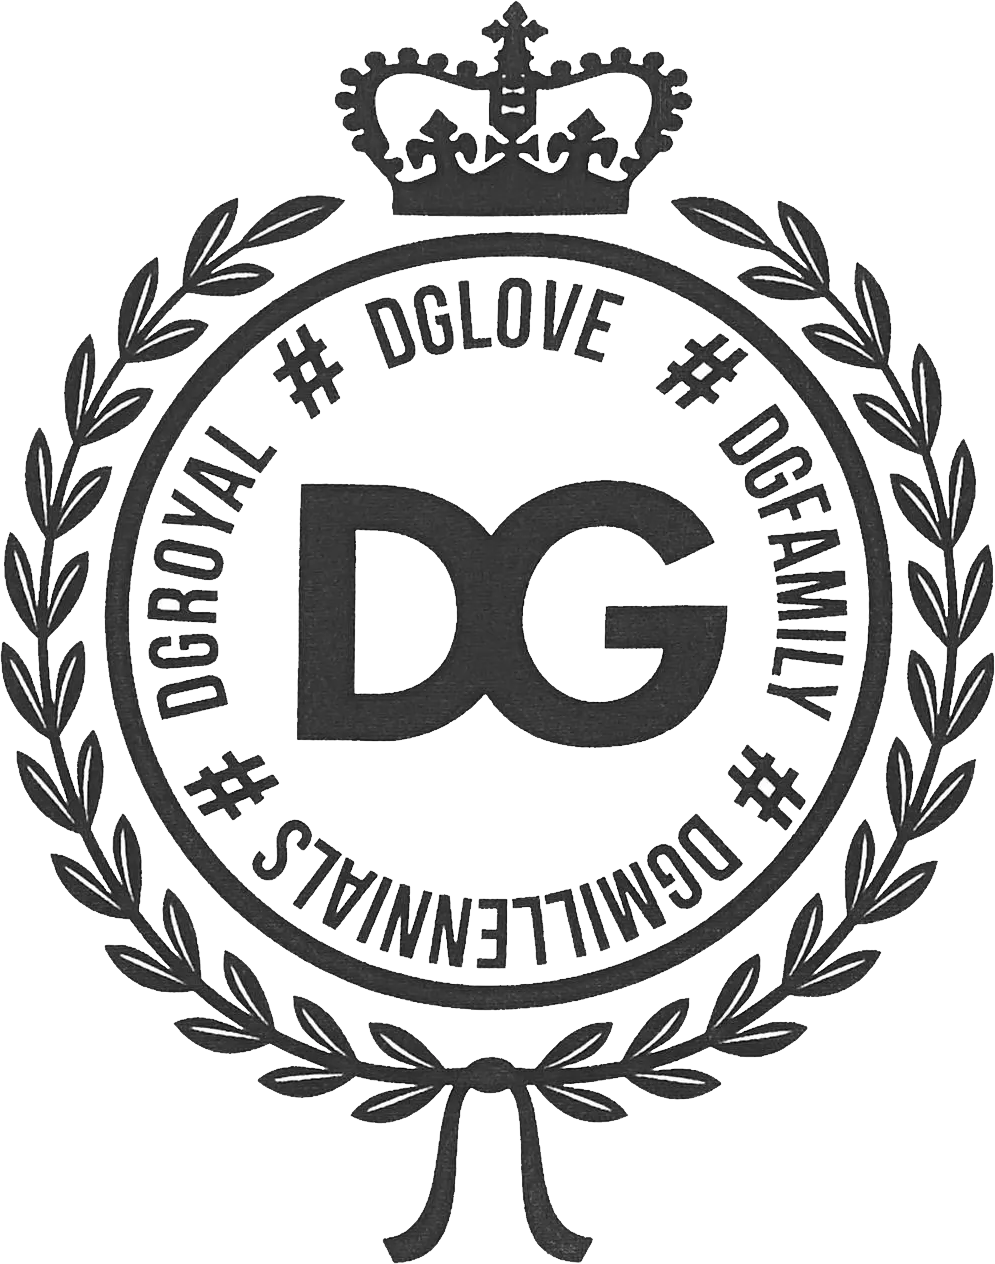 Dolce & Gabbana logo PNG